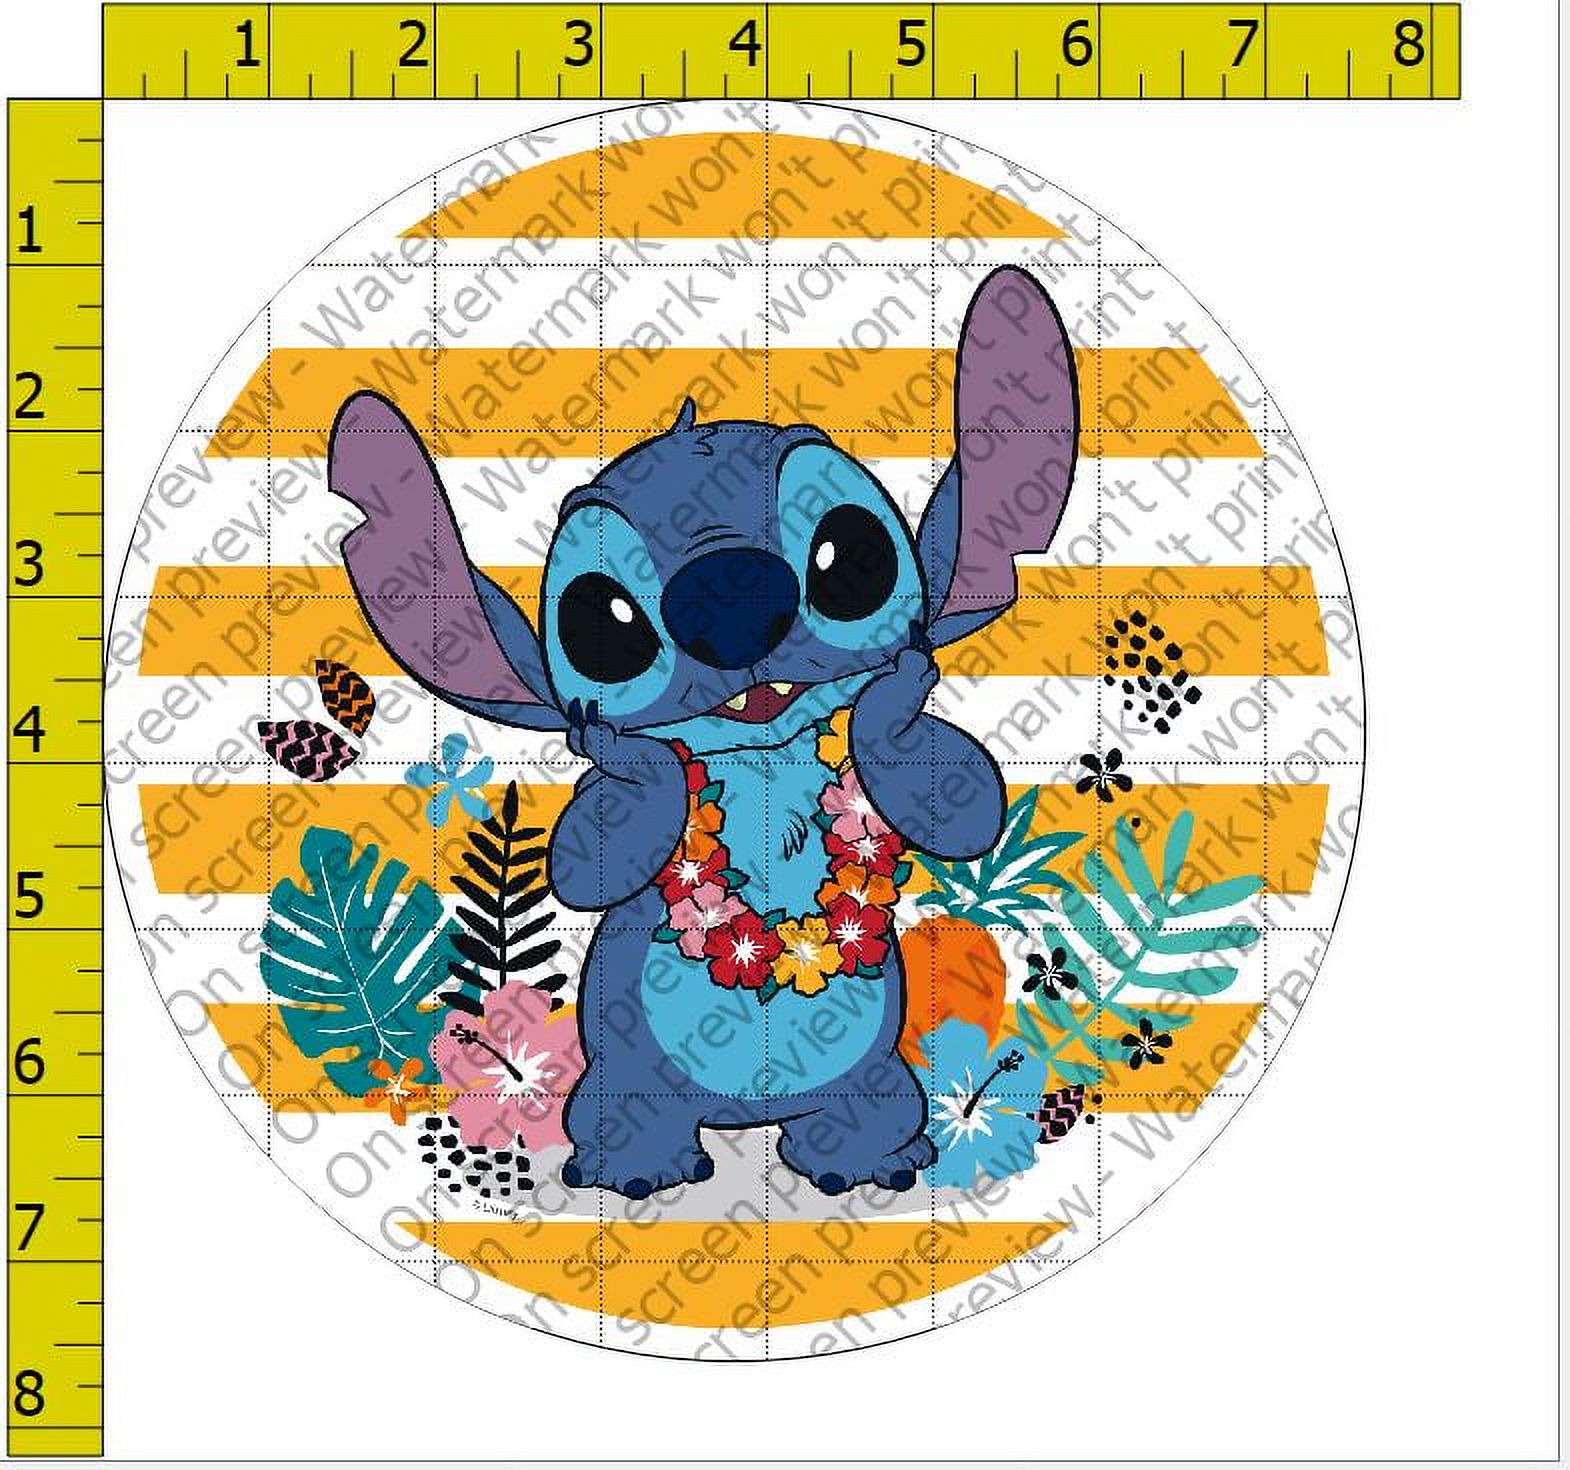 Disney Lilo and Stitch Edible Cake Topper Image - 8 Round 